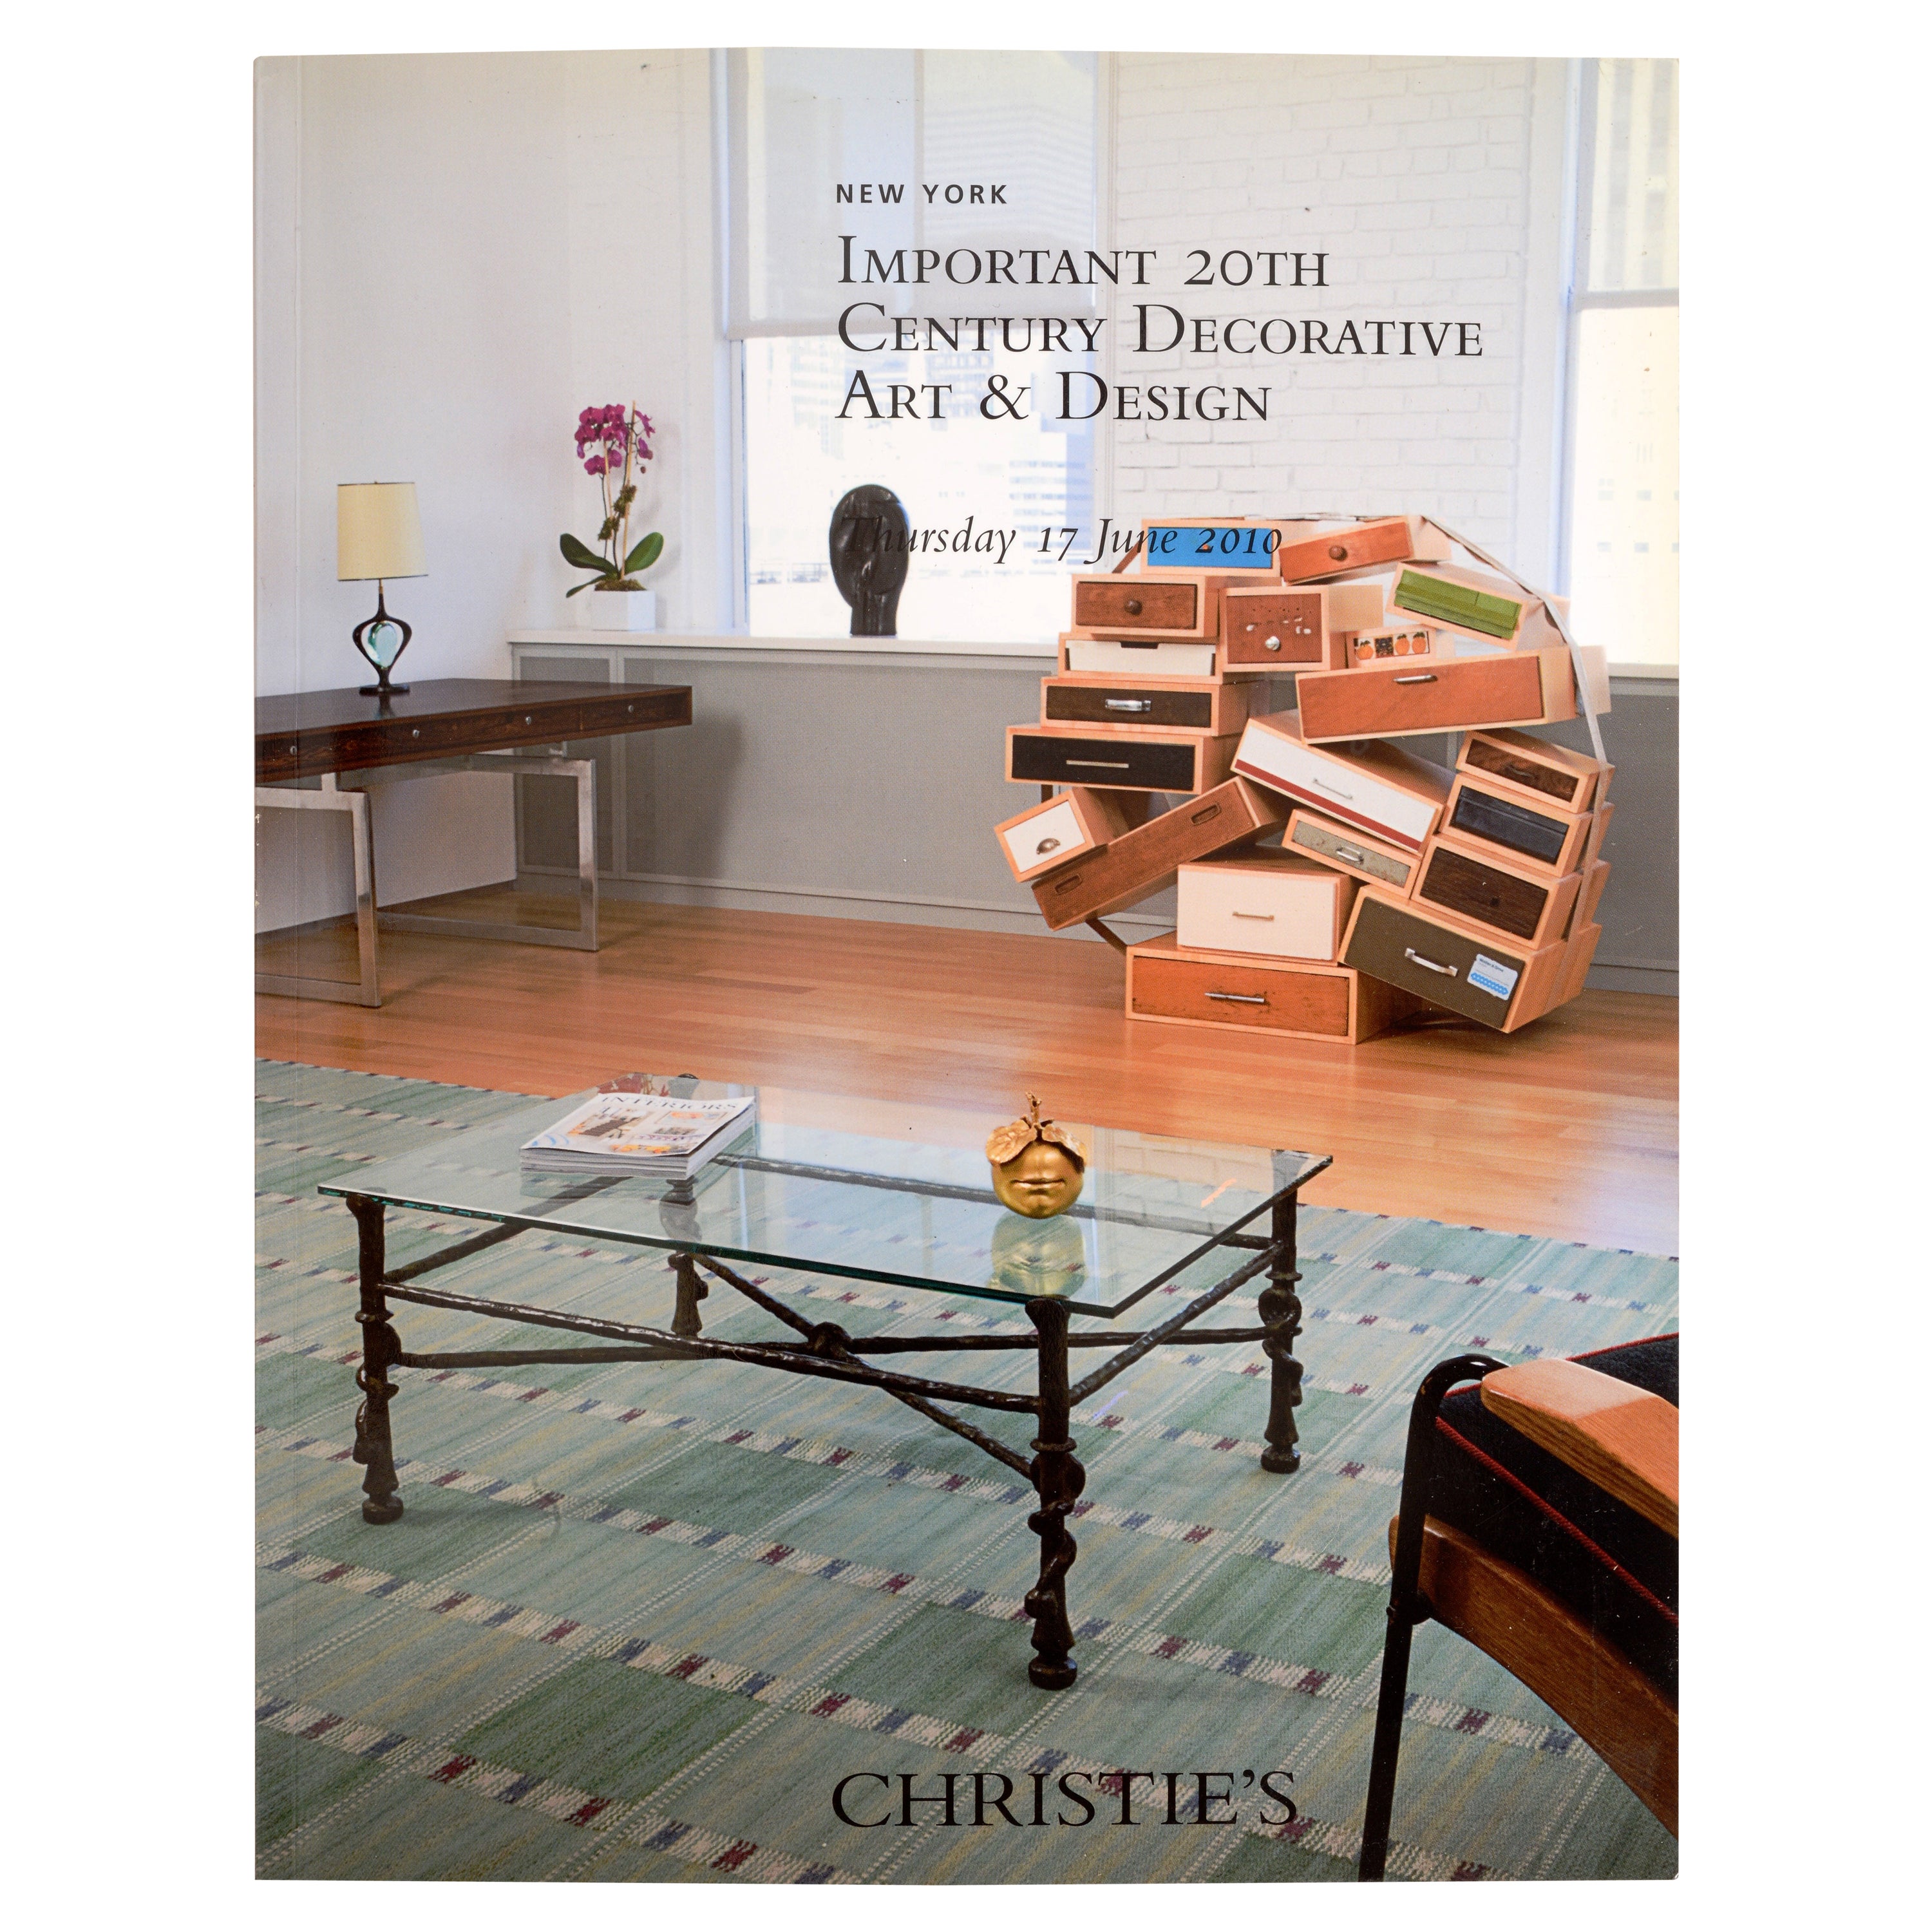 Christies June 2010 Important 20th Century Decorative Art & Design For Sale